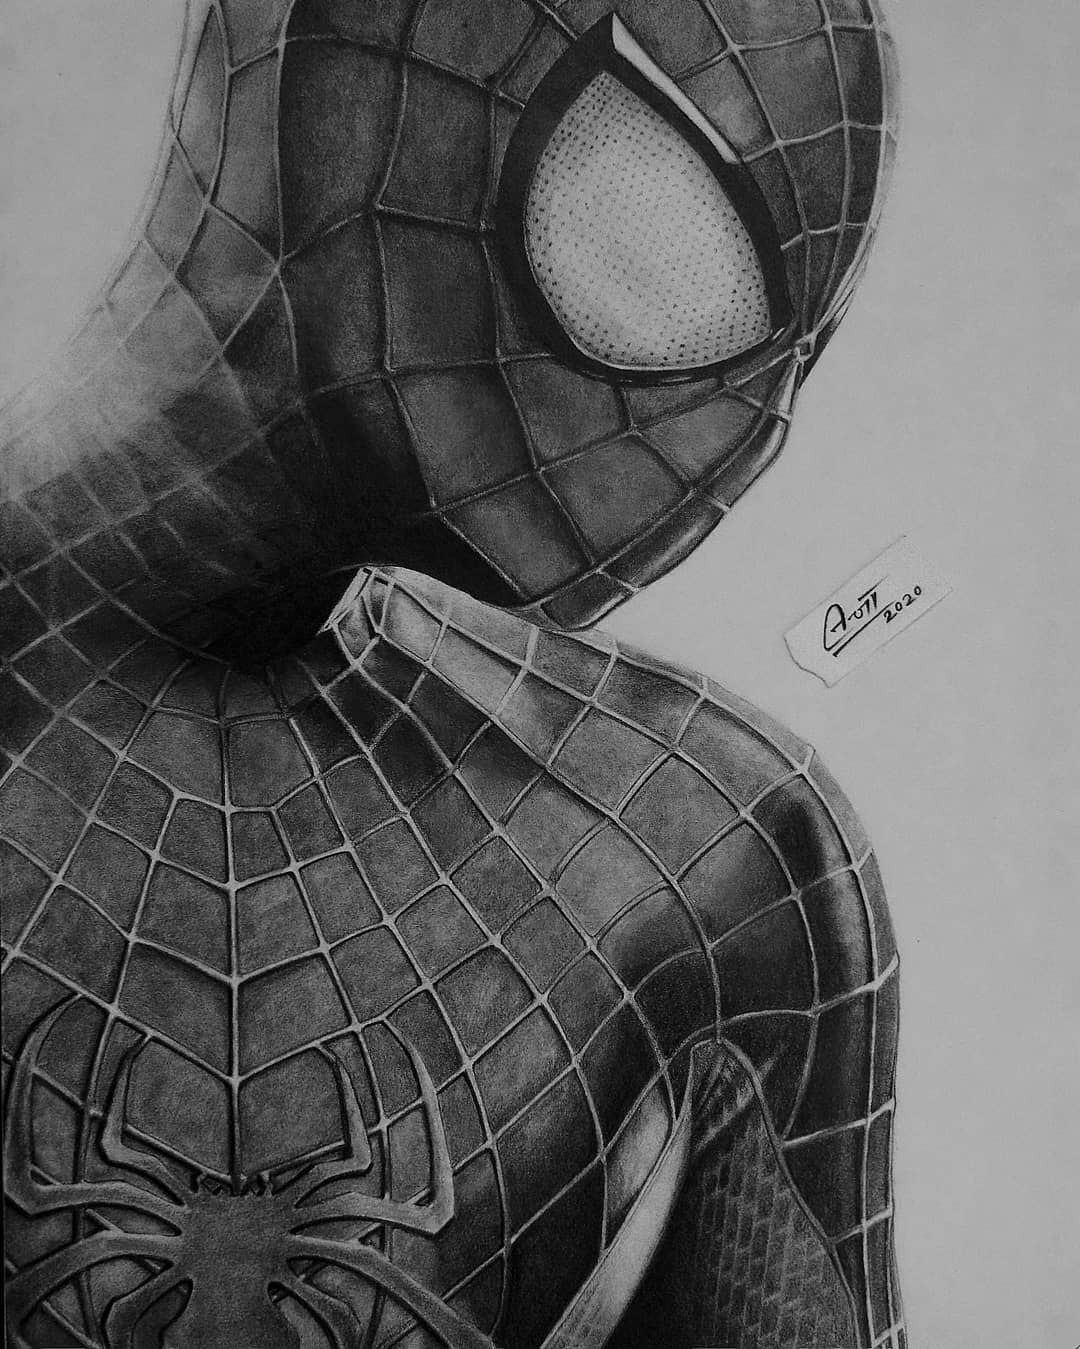 Spiderman Sketch Face Mug